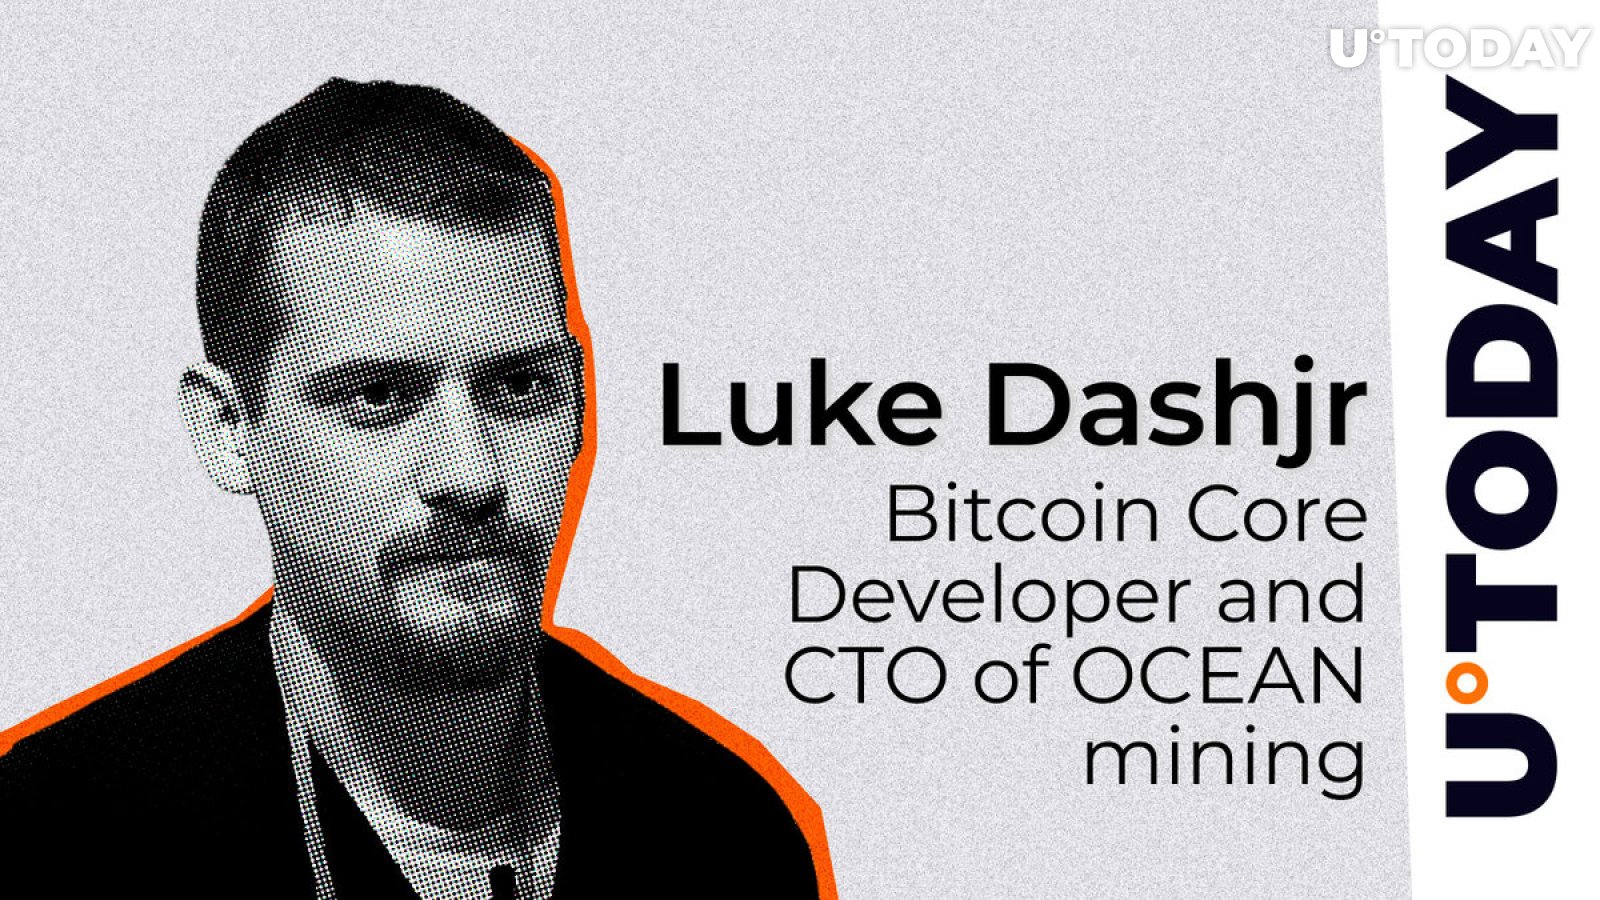 Bitcoin Core Developer Luke Dashjr Worried About This New Update